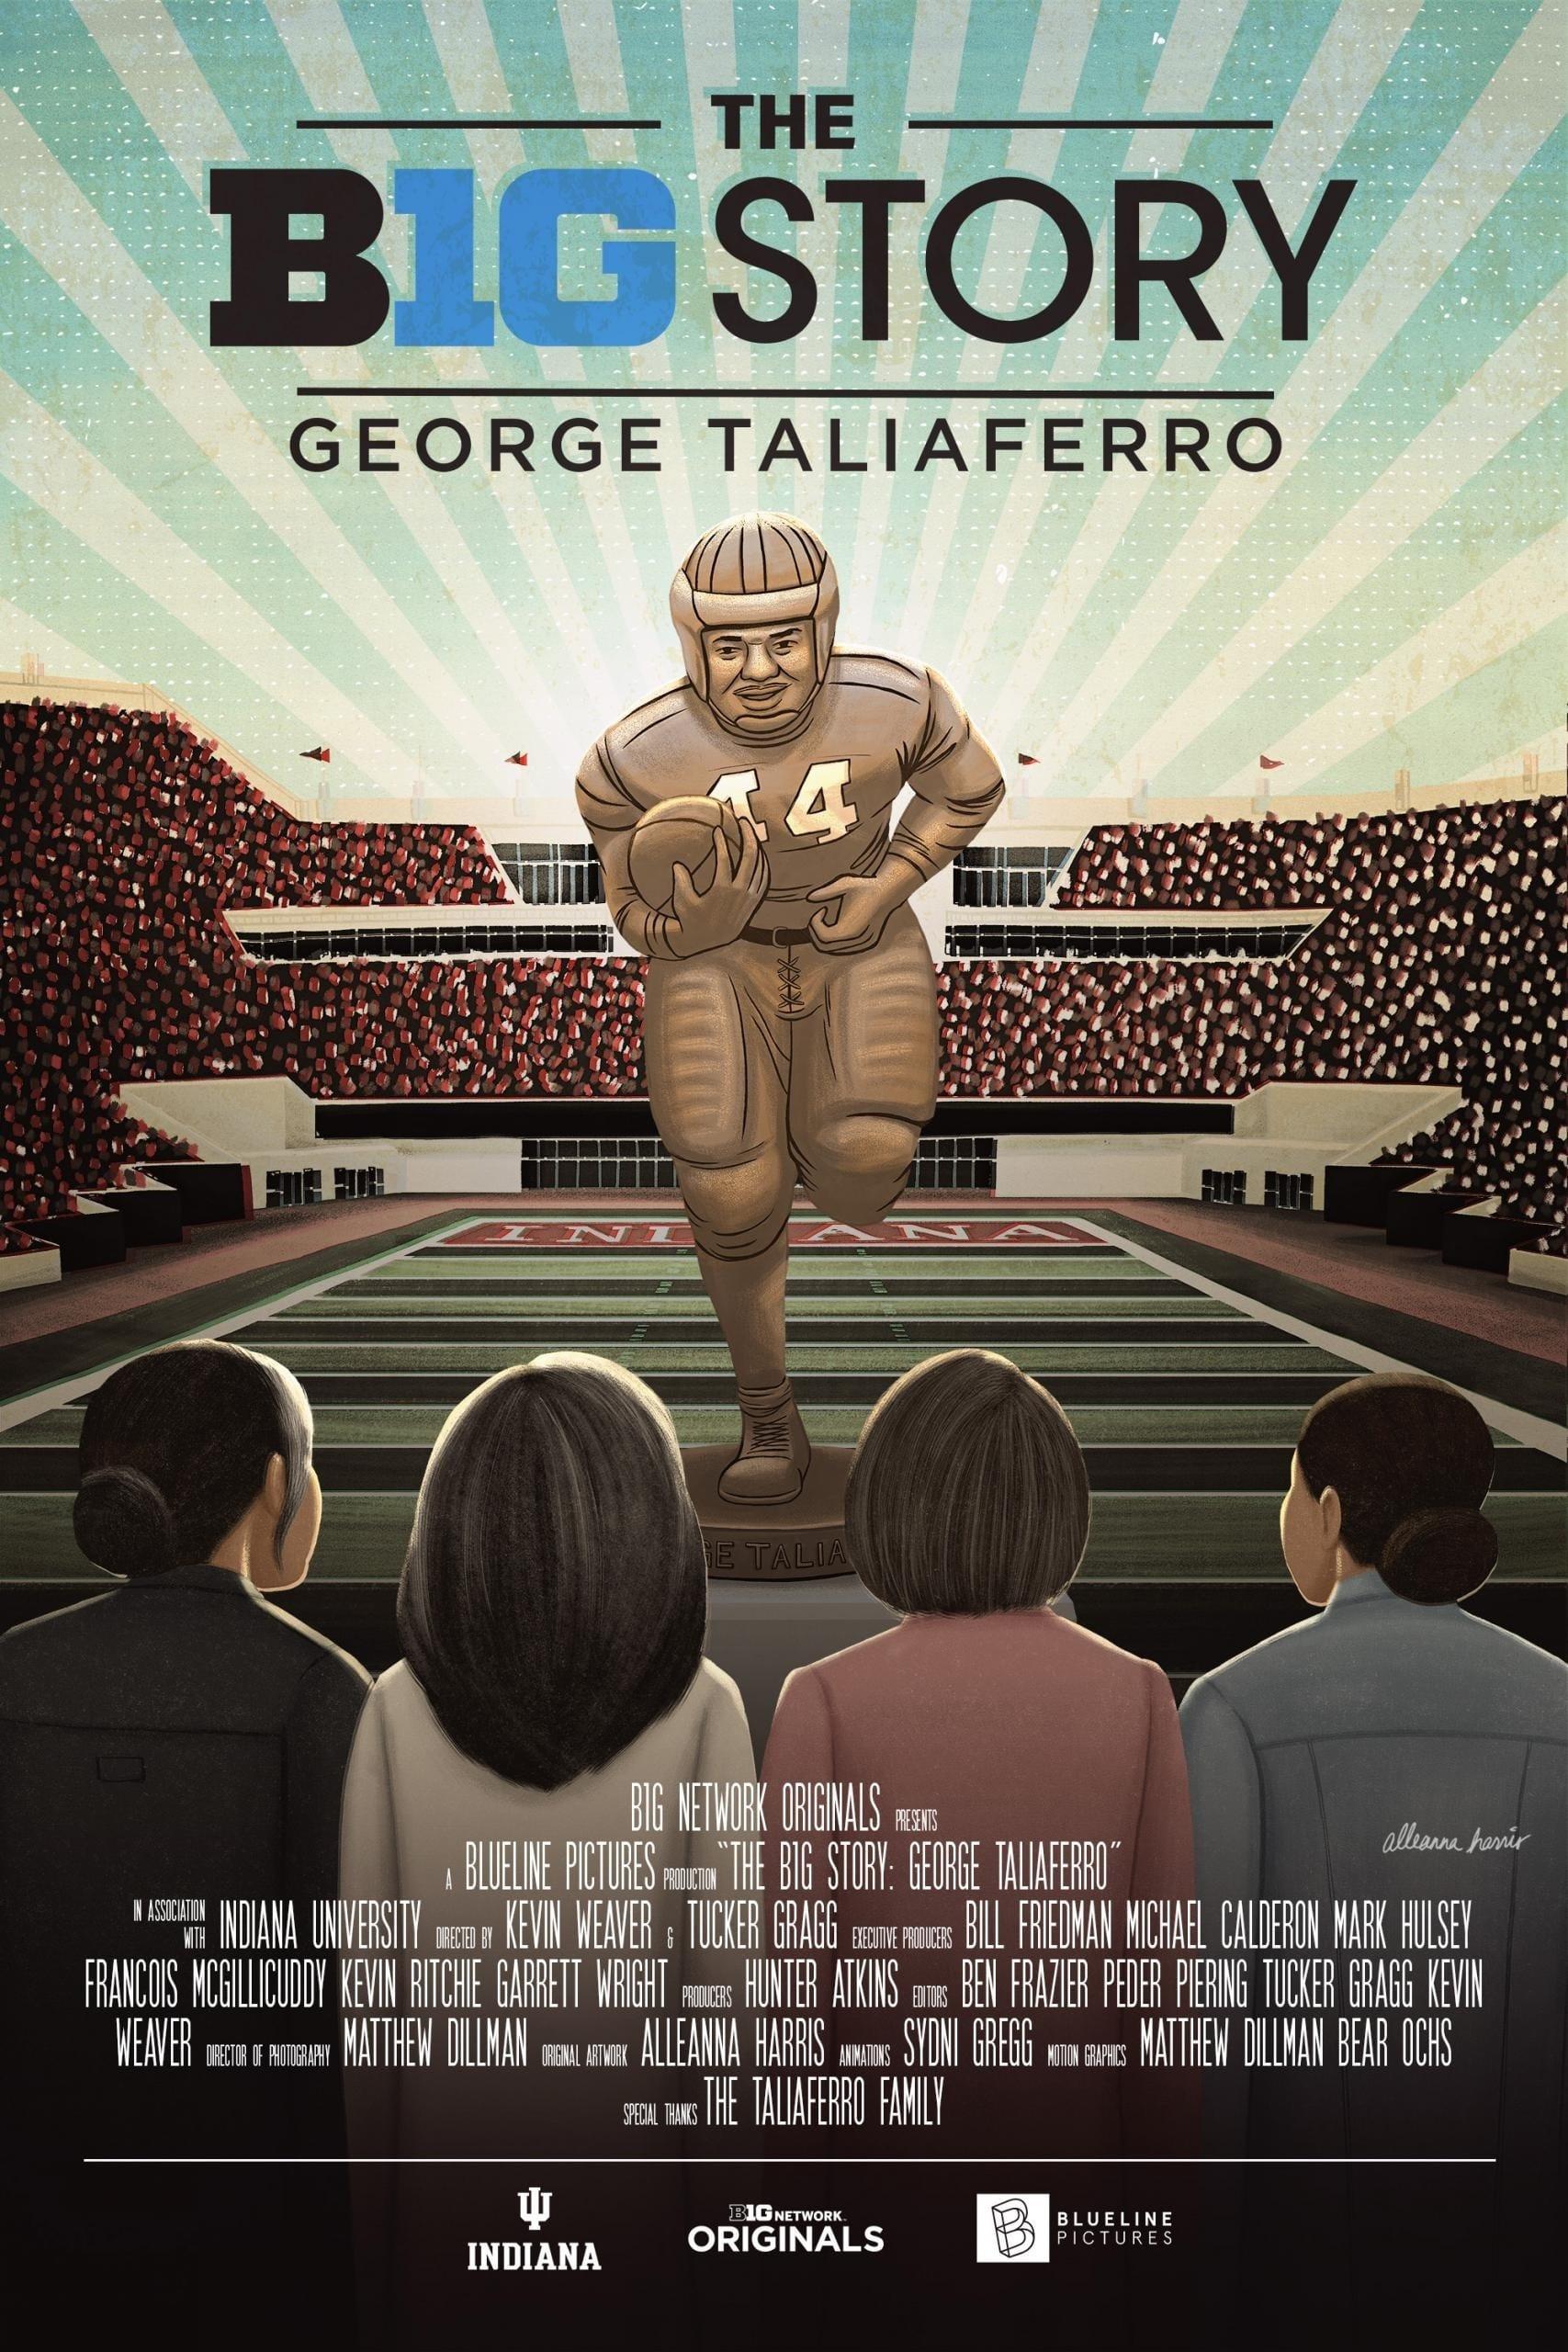 The B1G Story: George Taliaferro poster